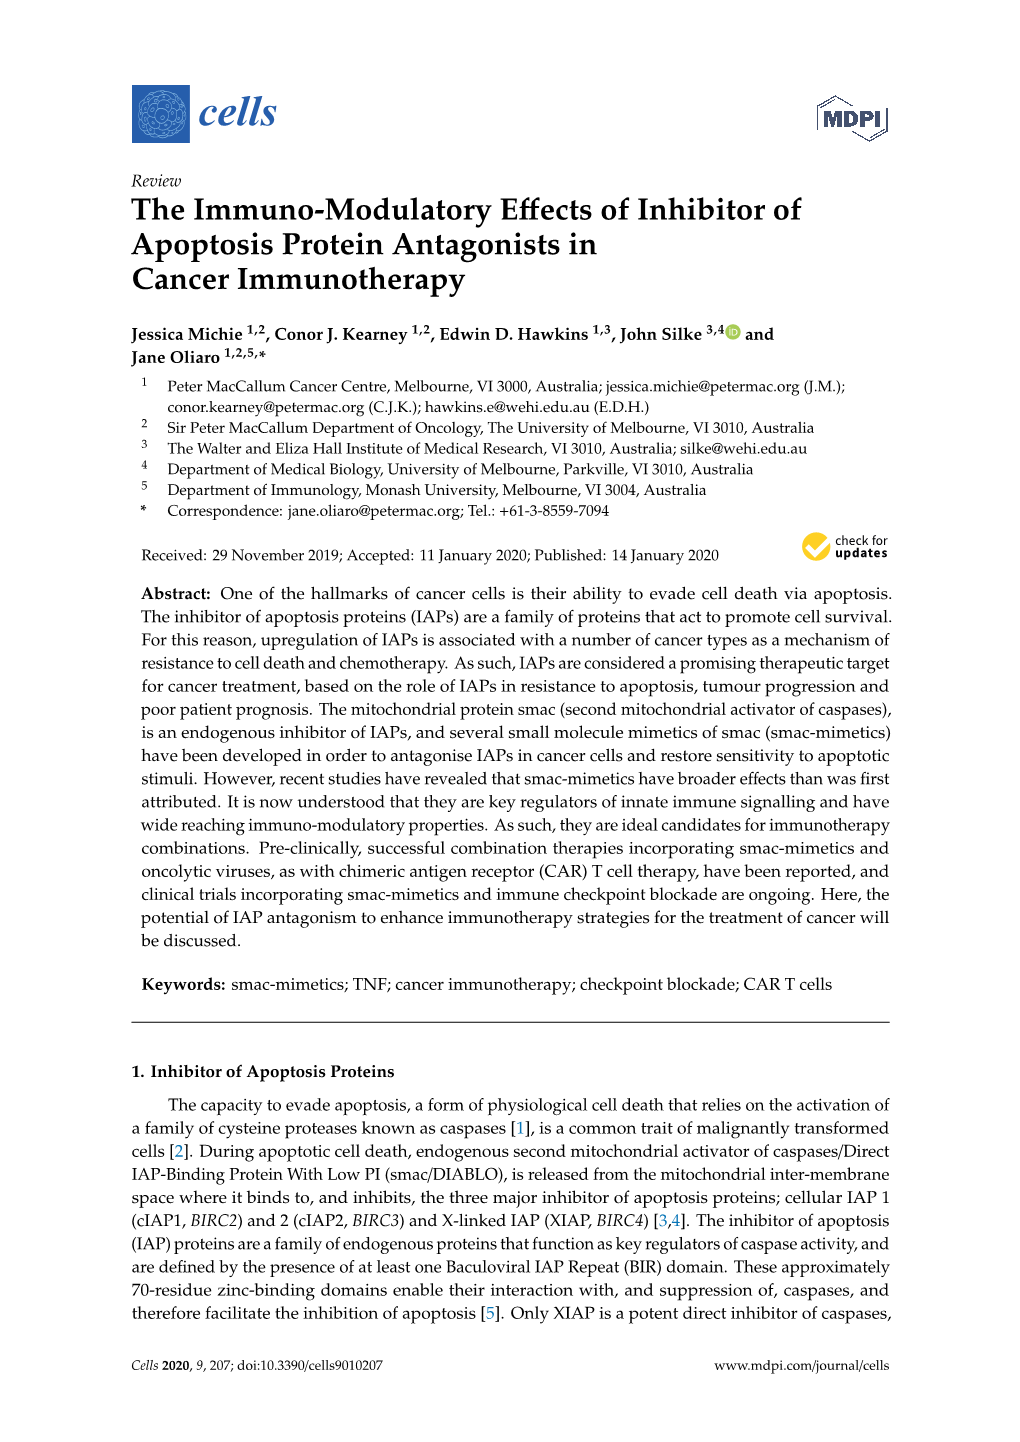 The Immuno-Modulatory Effects of Inhibitor of Apoptosis Protein